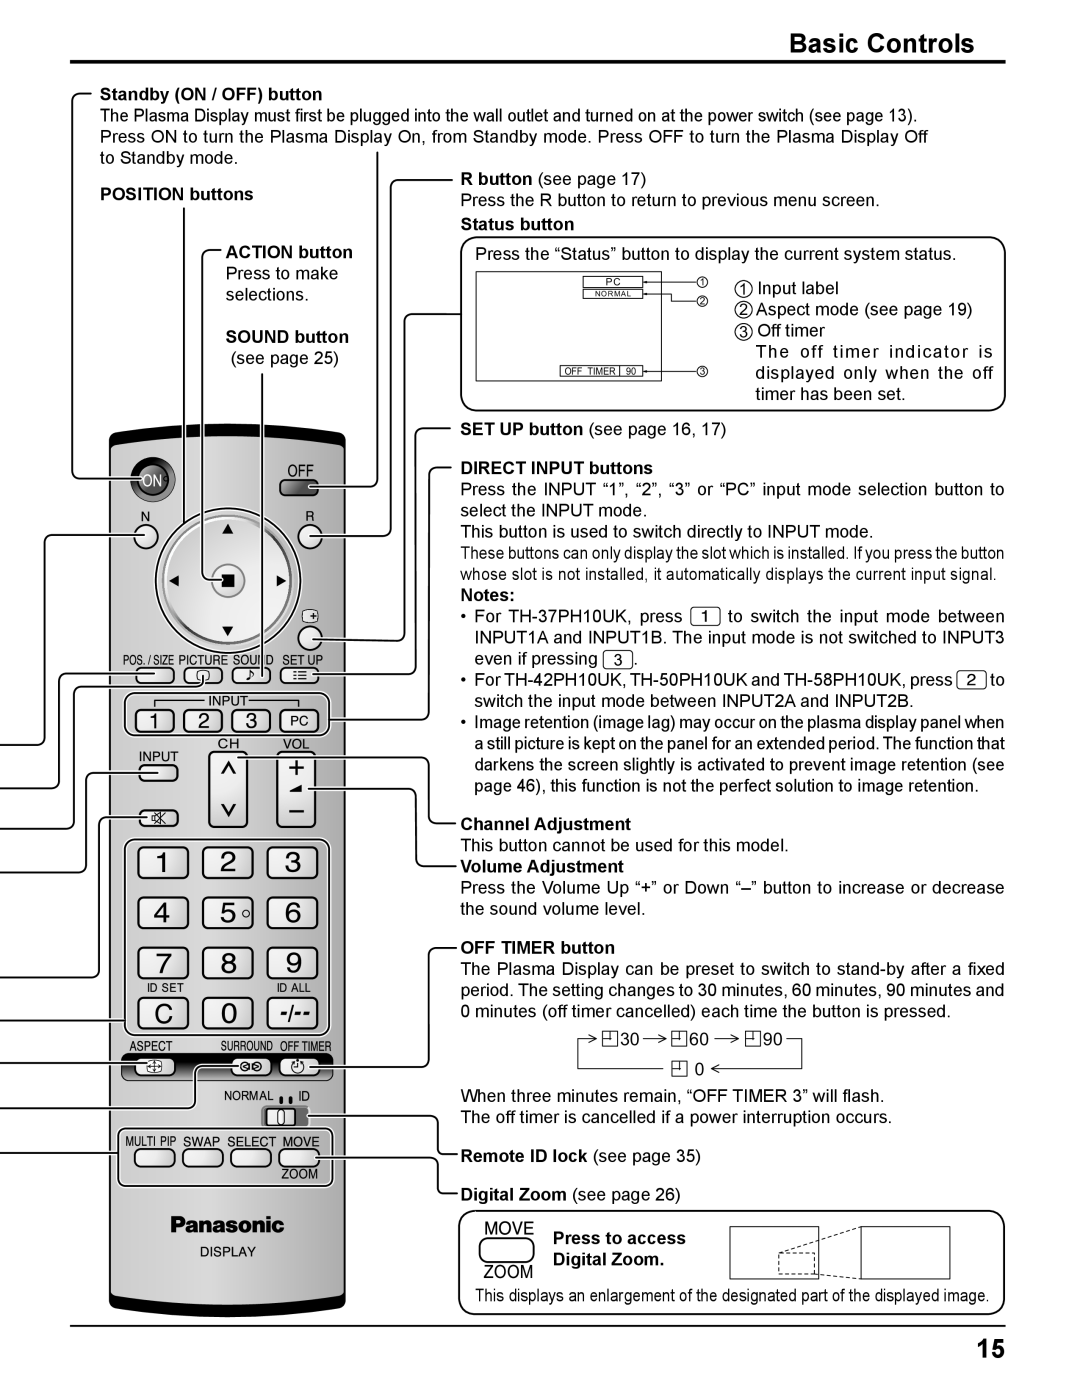 Panasonic TH-37PH10UK manual Basic Controls, Off Timer 